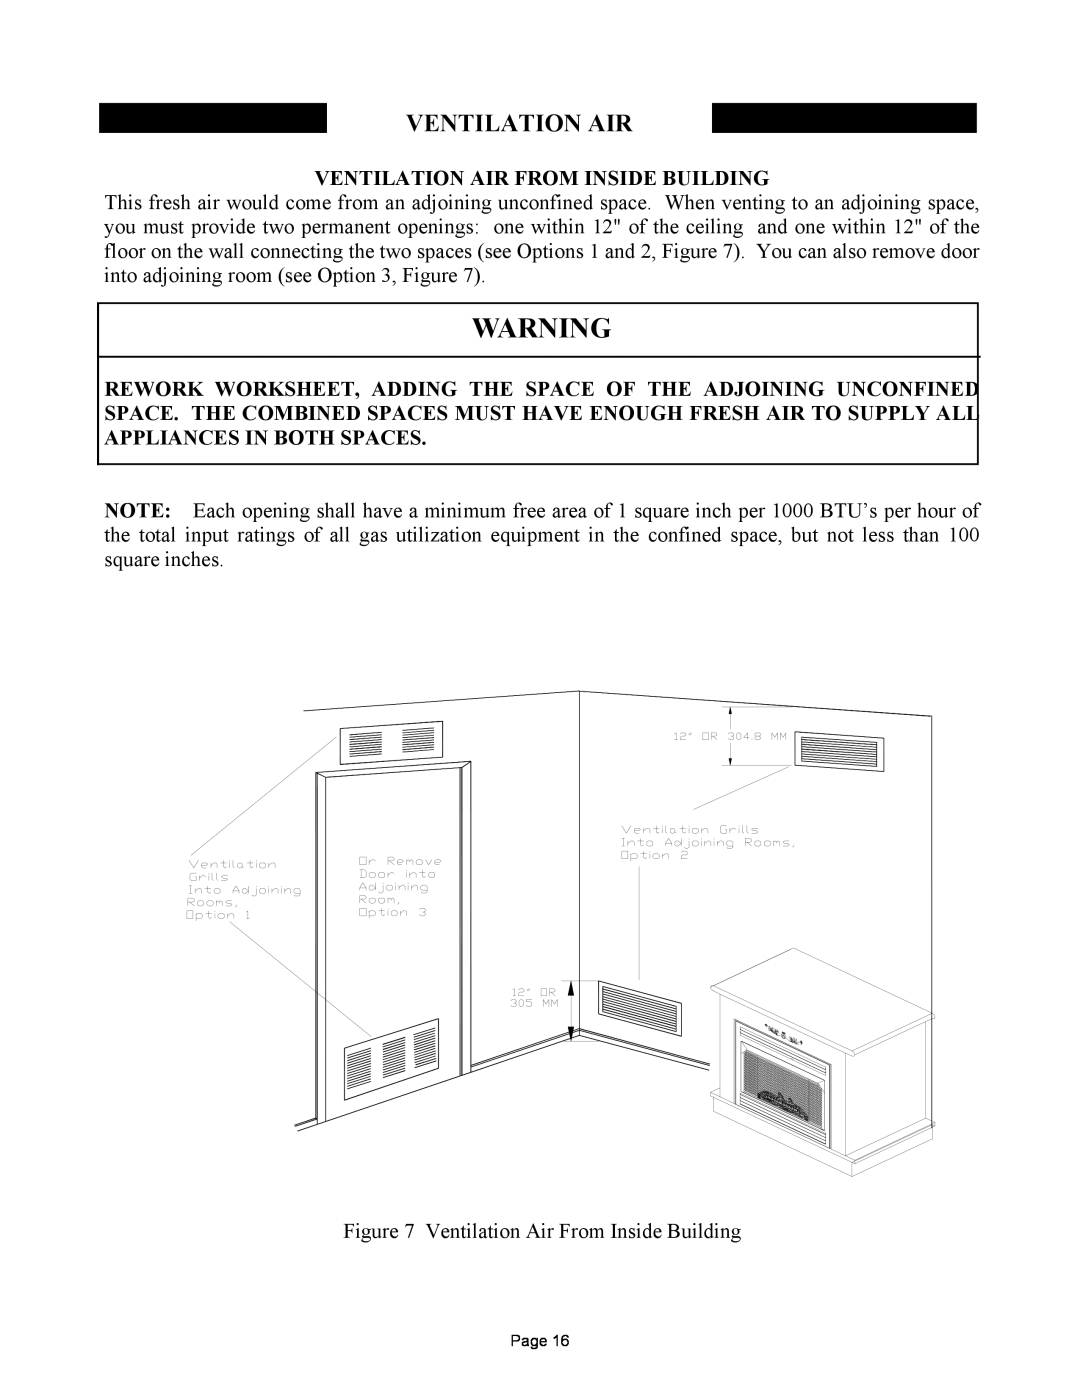 New Buck Corporation MODEL FP-327-ZC manual Ventilation Air From Inside Building 